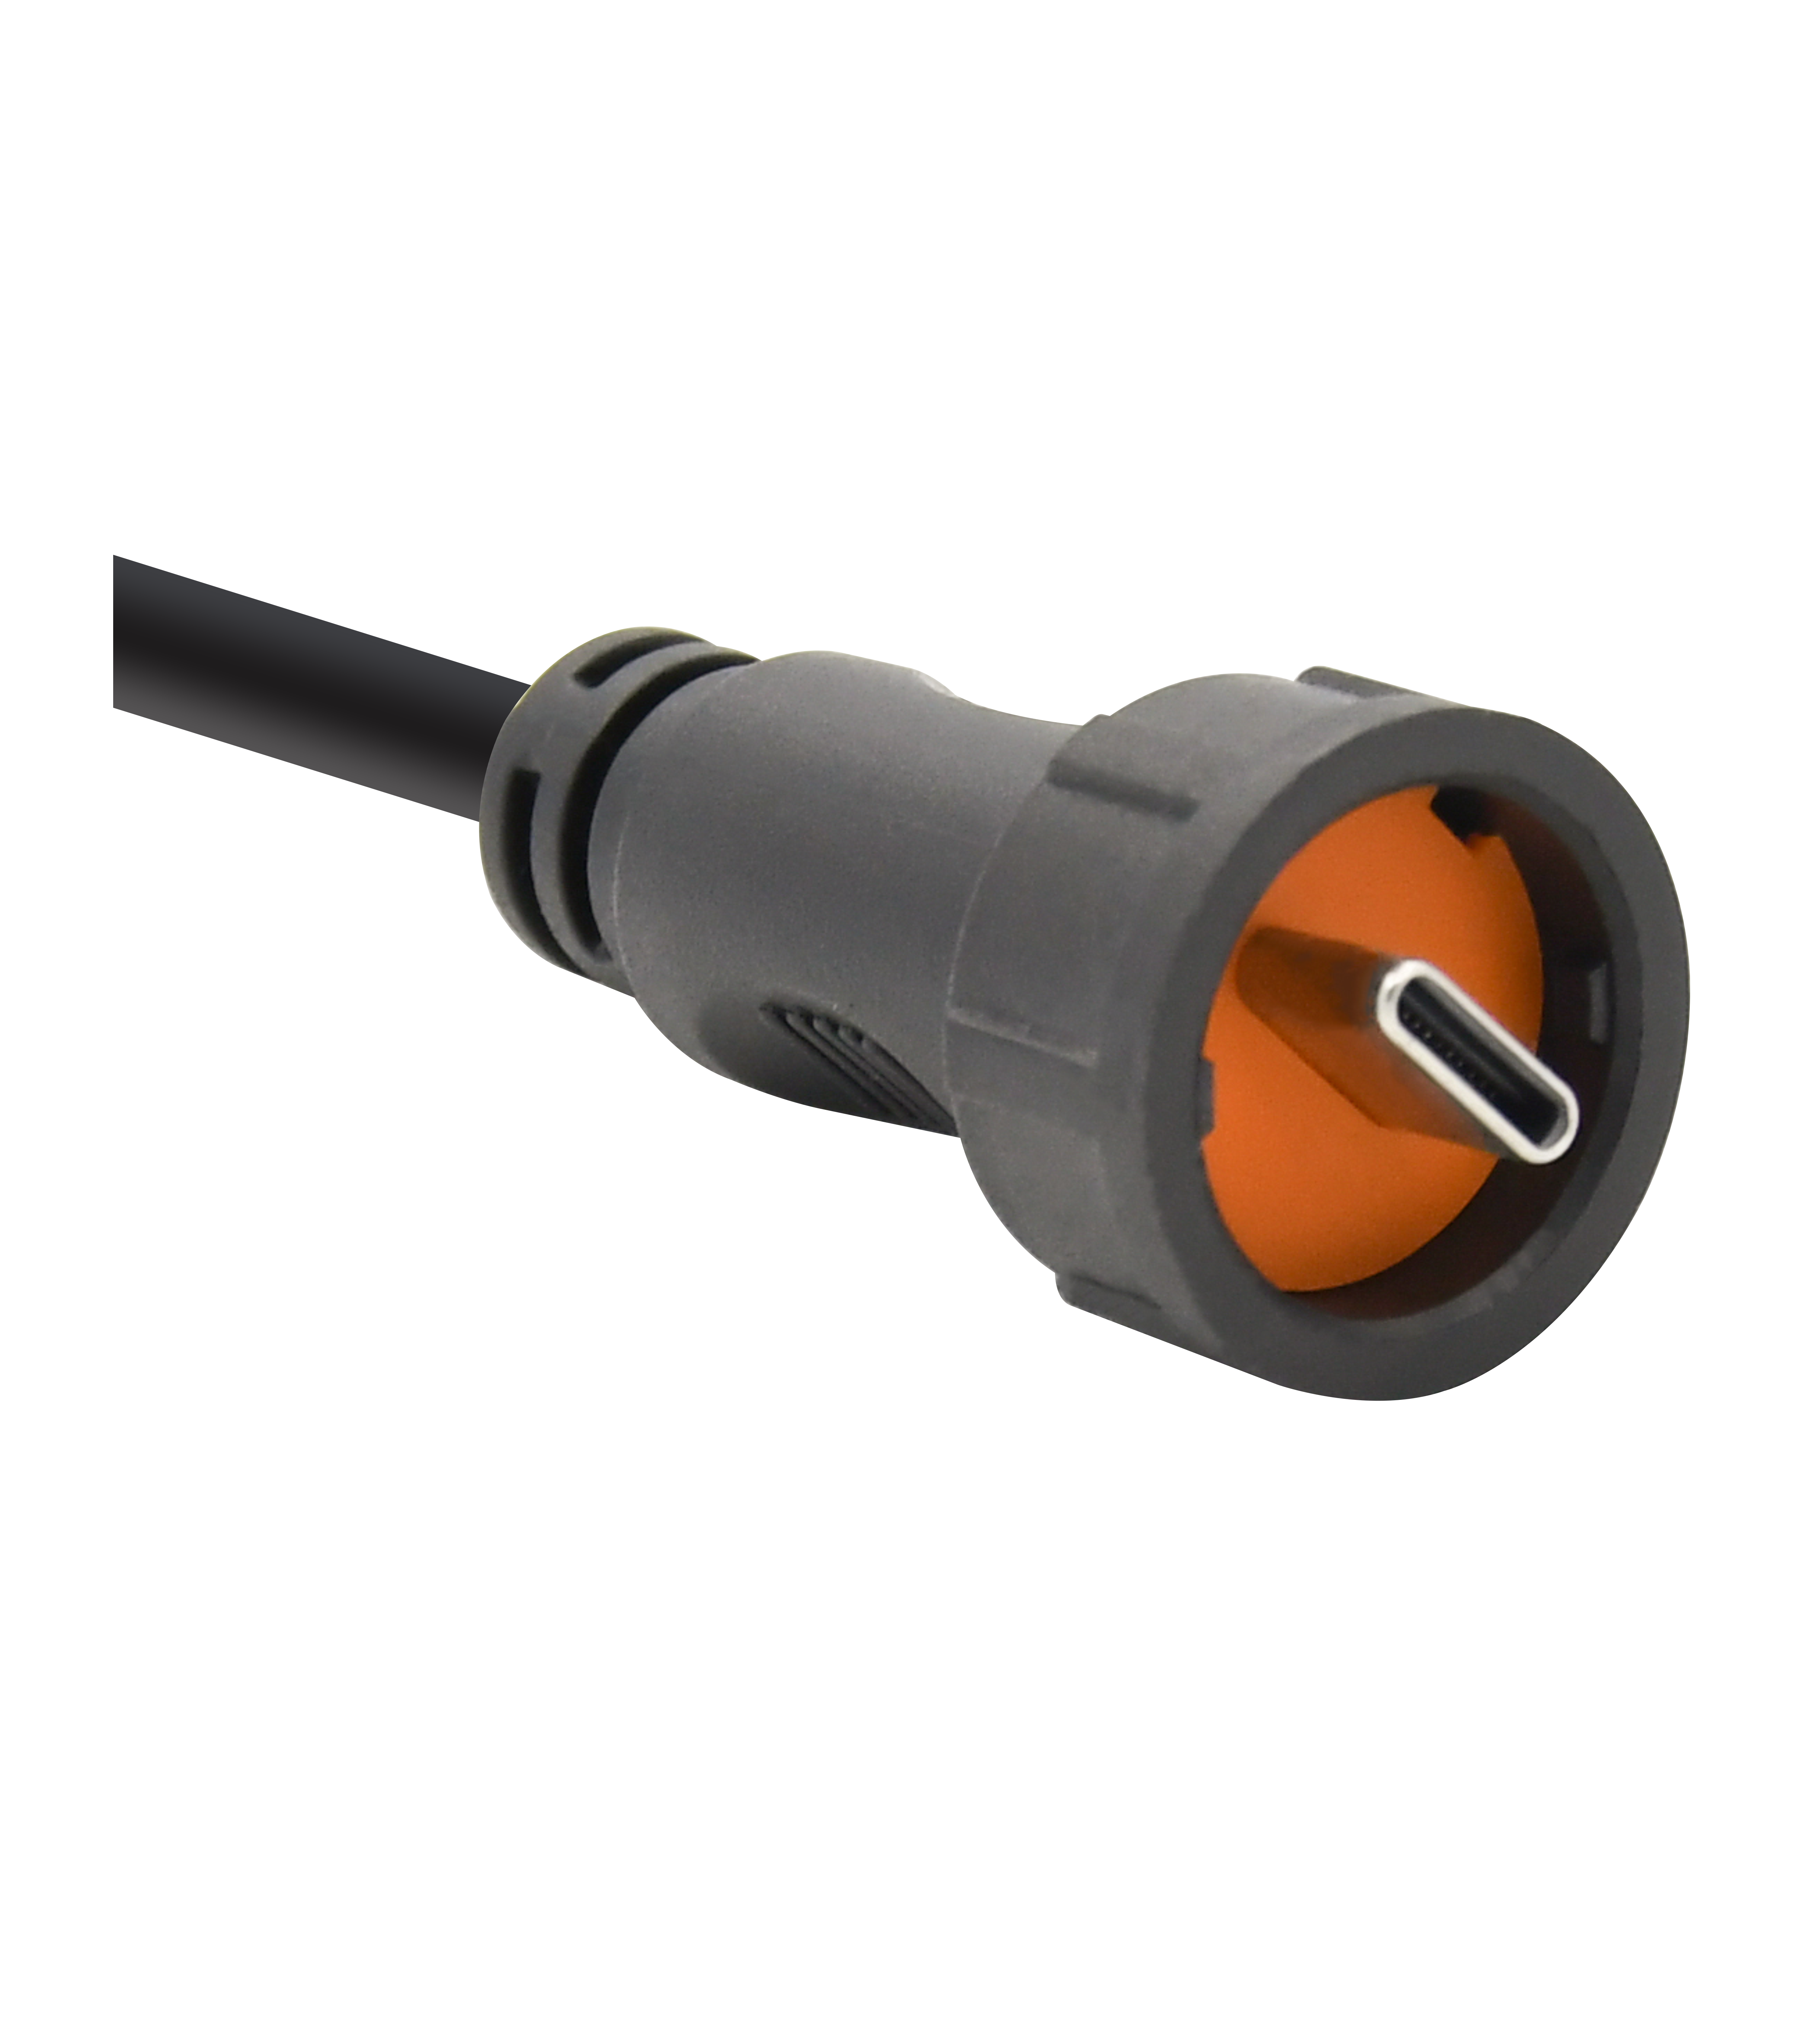 Rigoal - The Premium USB Connector Manufacturer Enhancing Industrial Efficiency